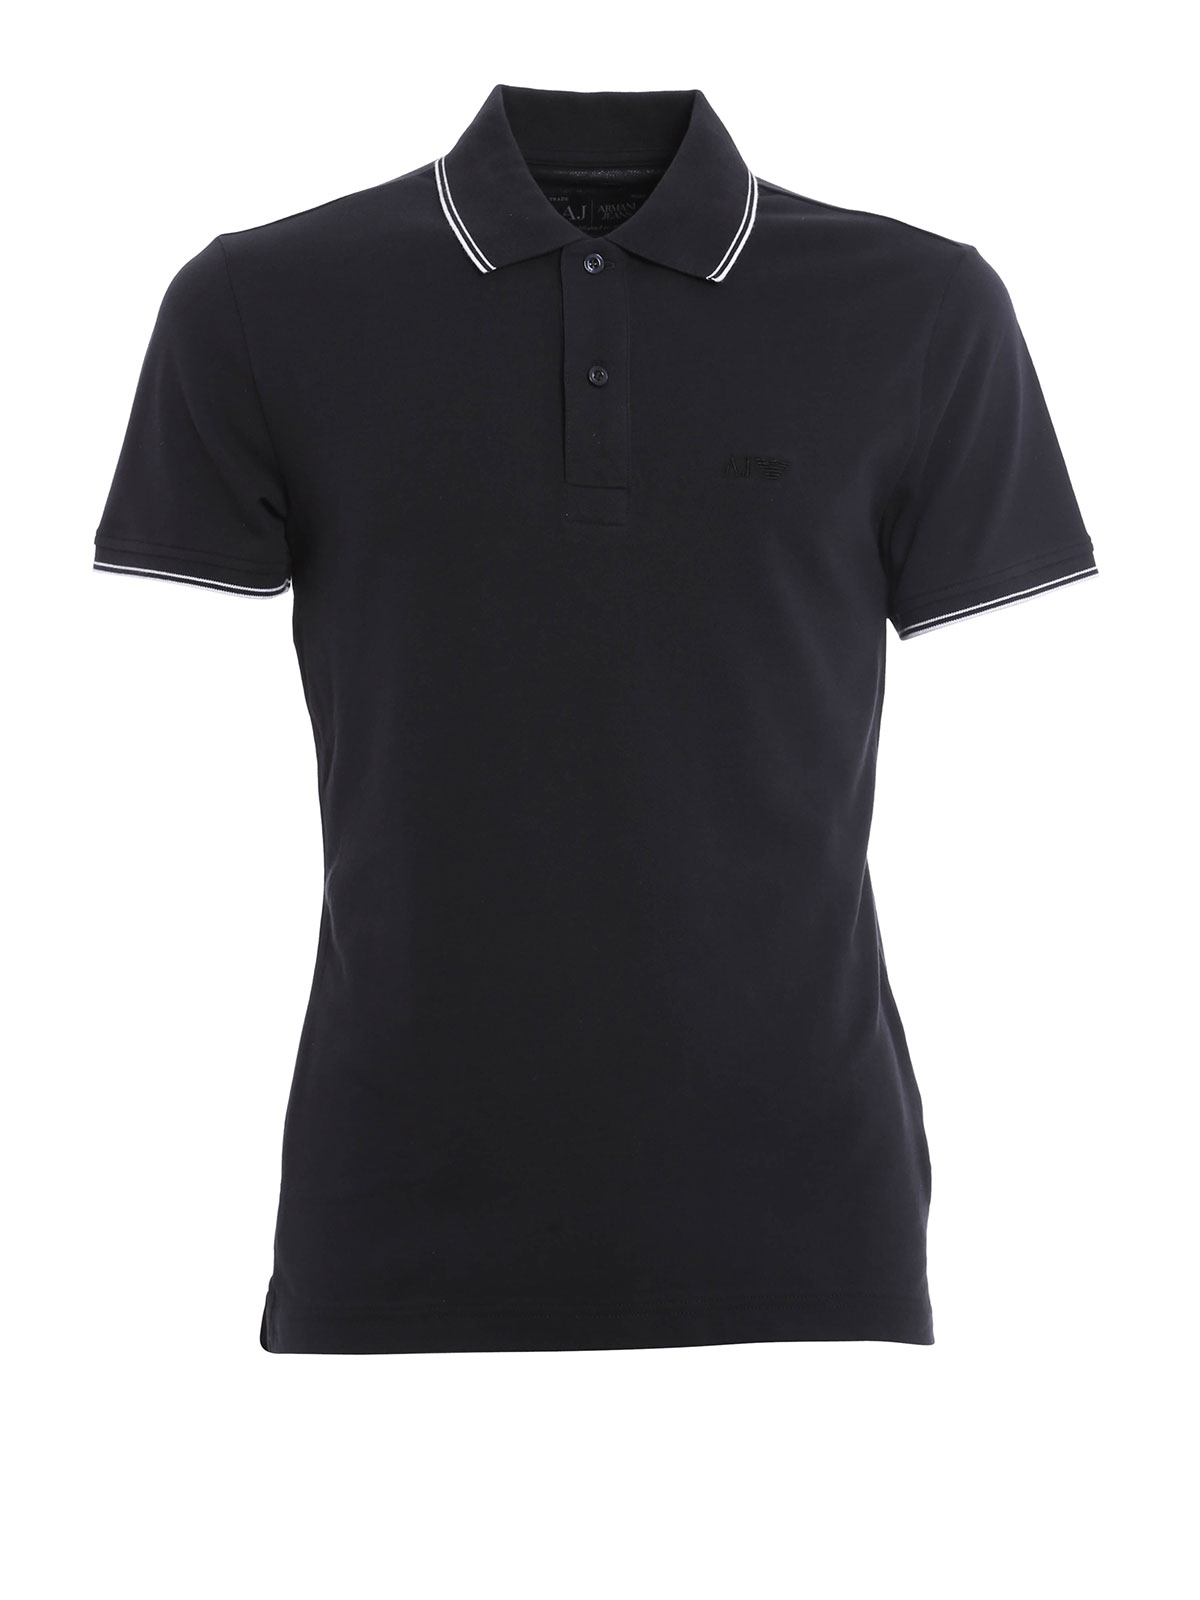 Polo shirts Armani Jeans - AJ Polo shirt - 06M3095 | Shop online at iKRIX